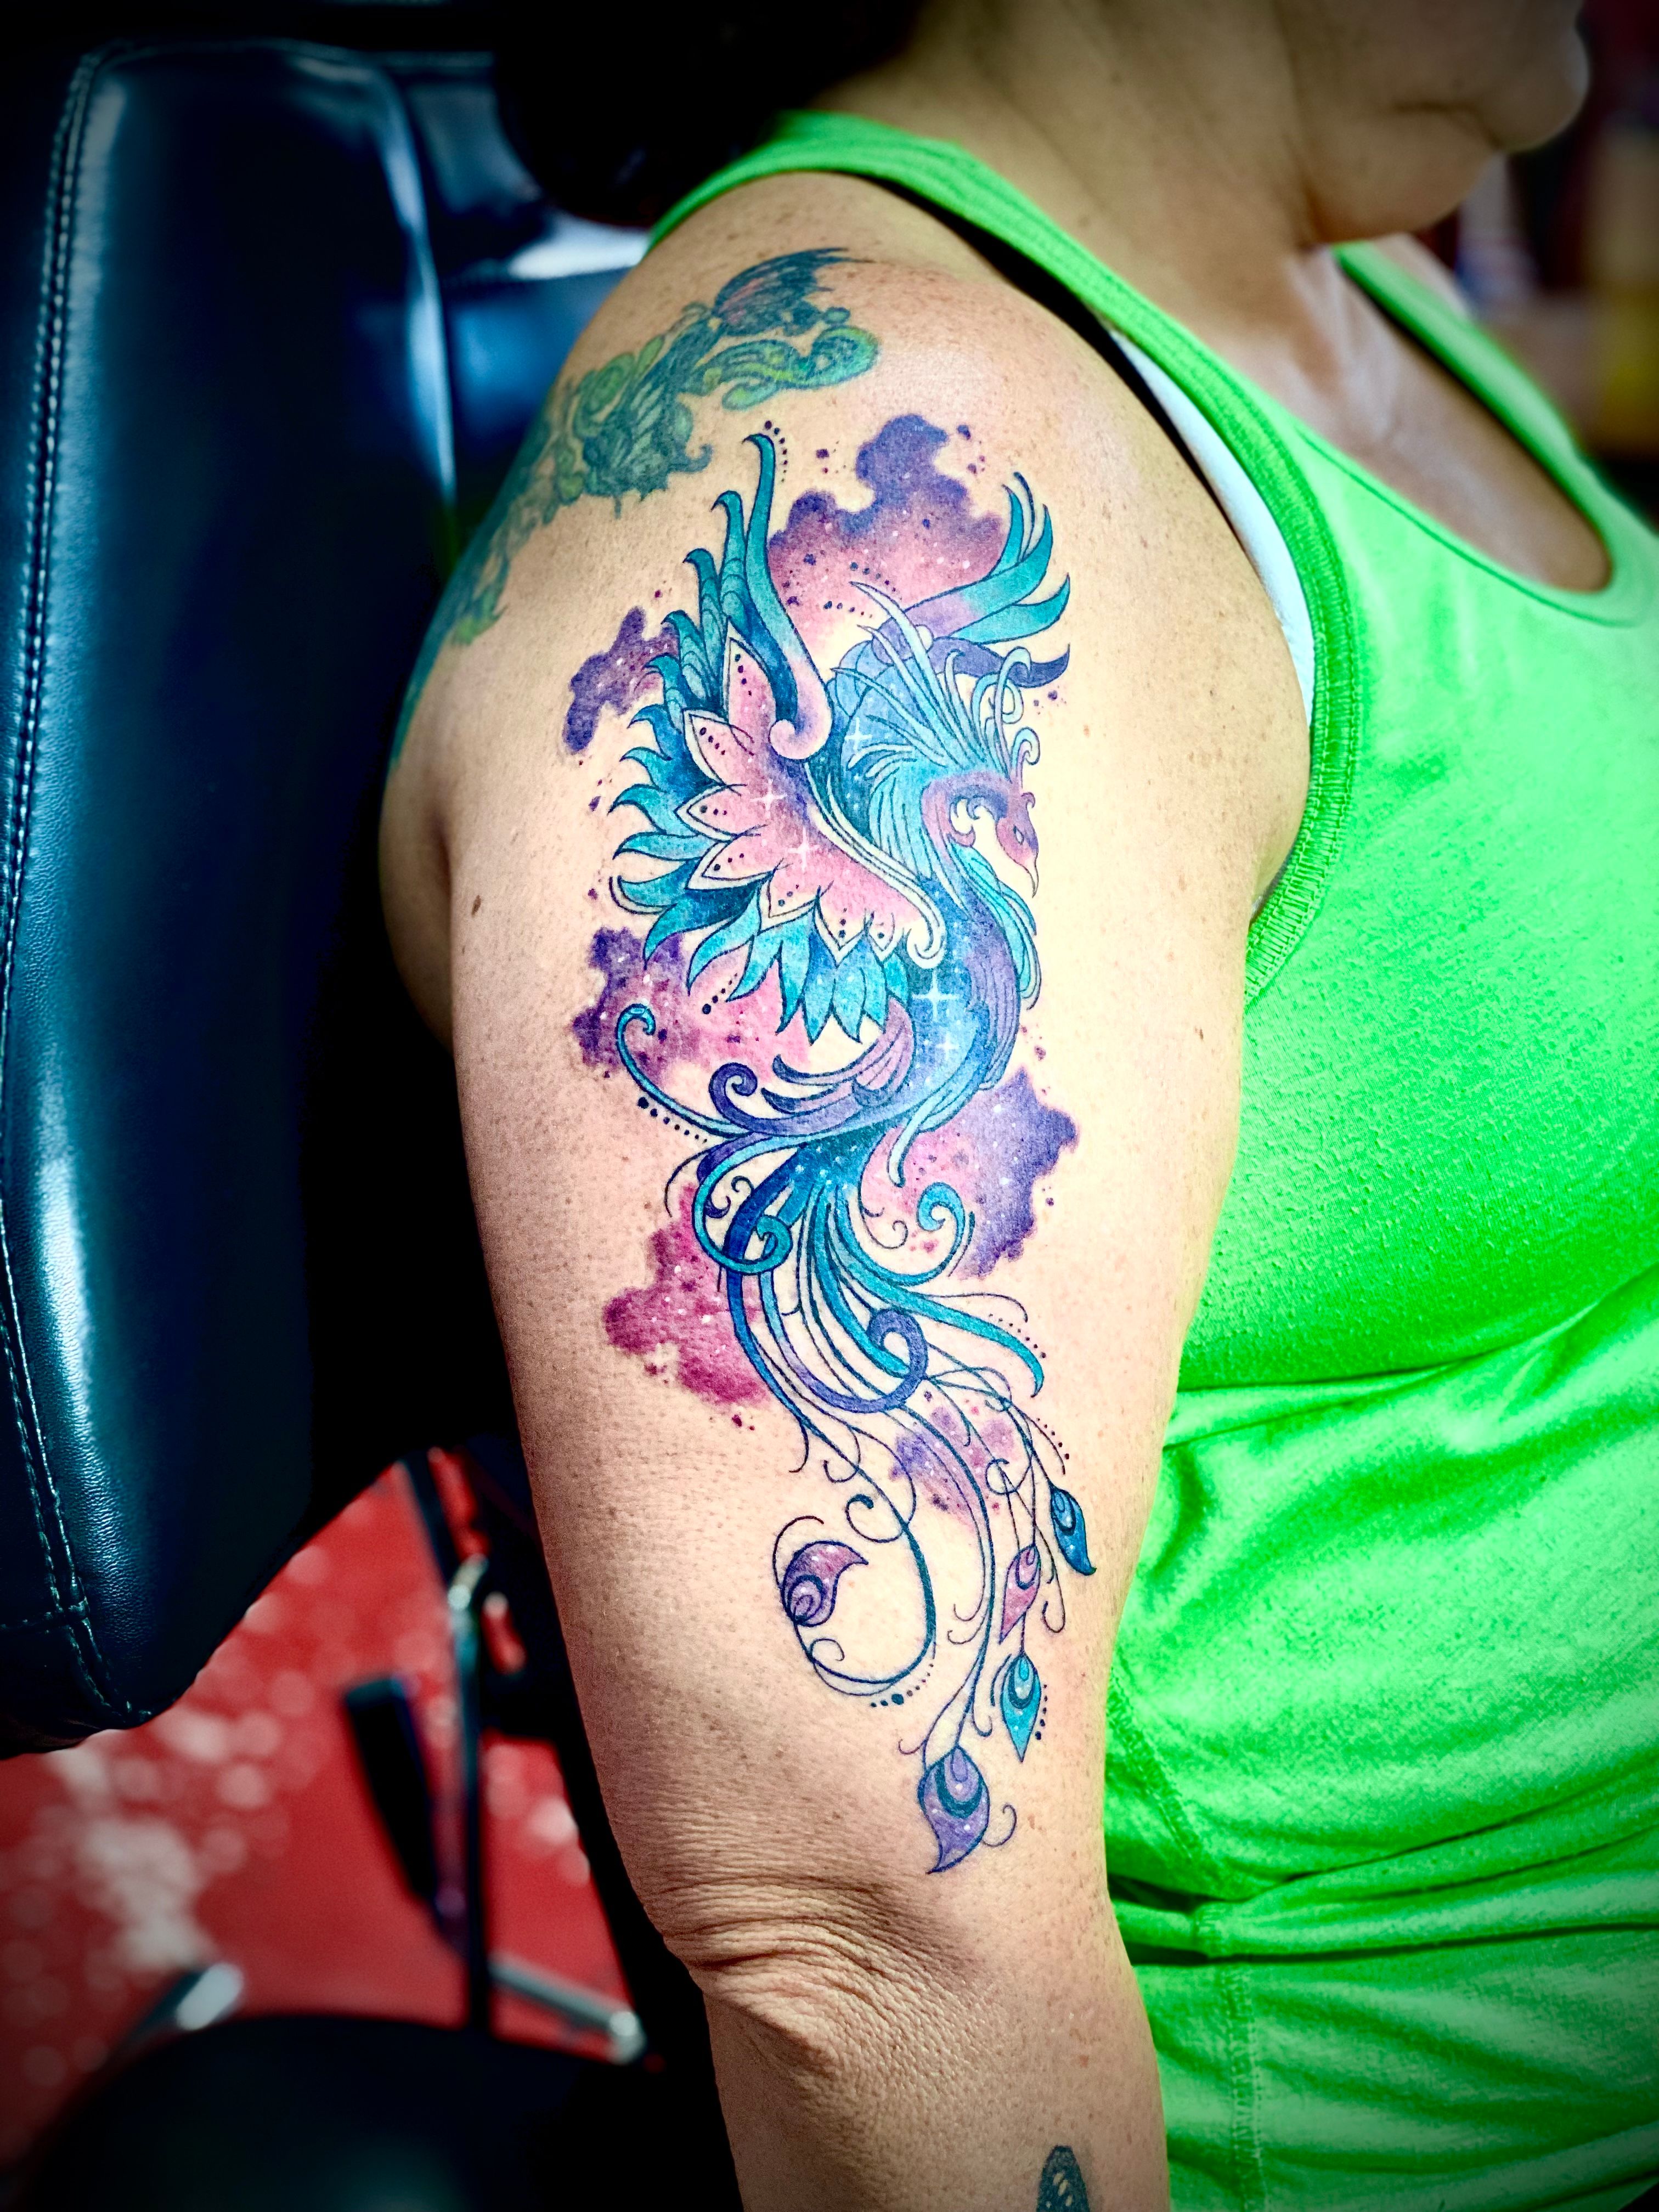 Scorpion Tattoo Meanings and Tattoo Ideas  CUSTOM TATTOO DESIGN